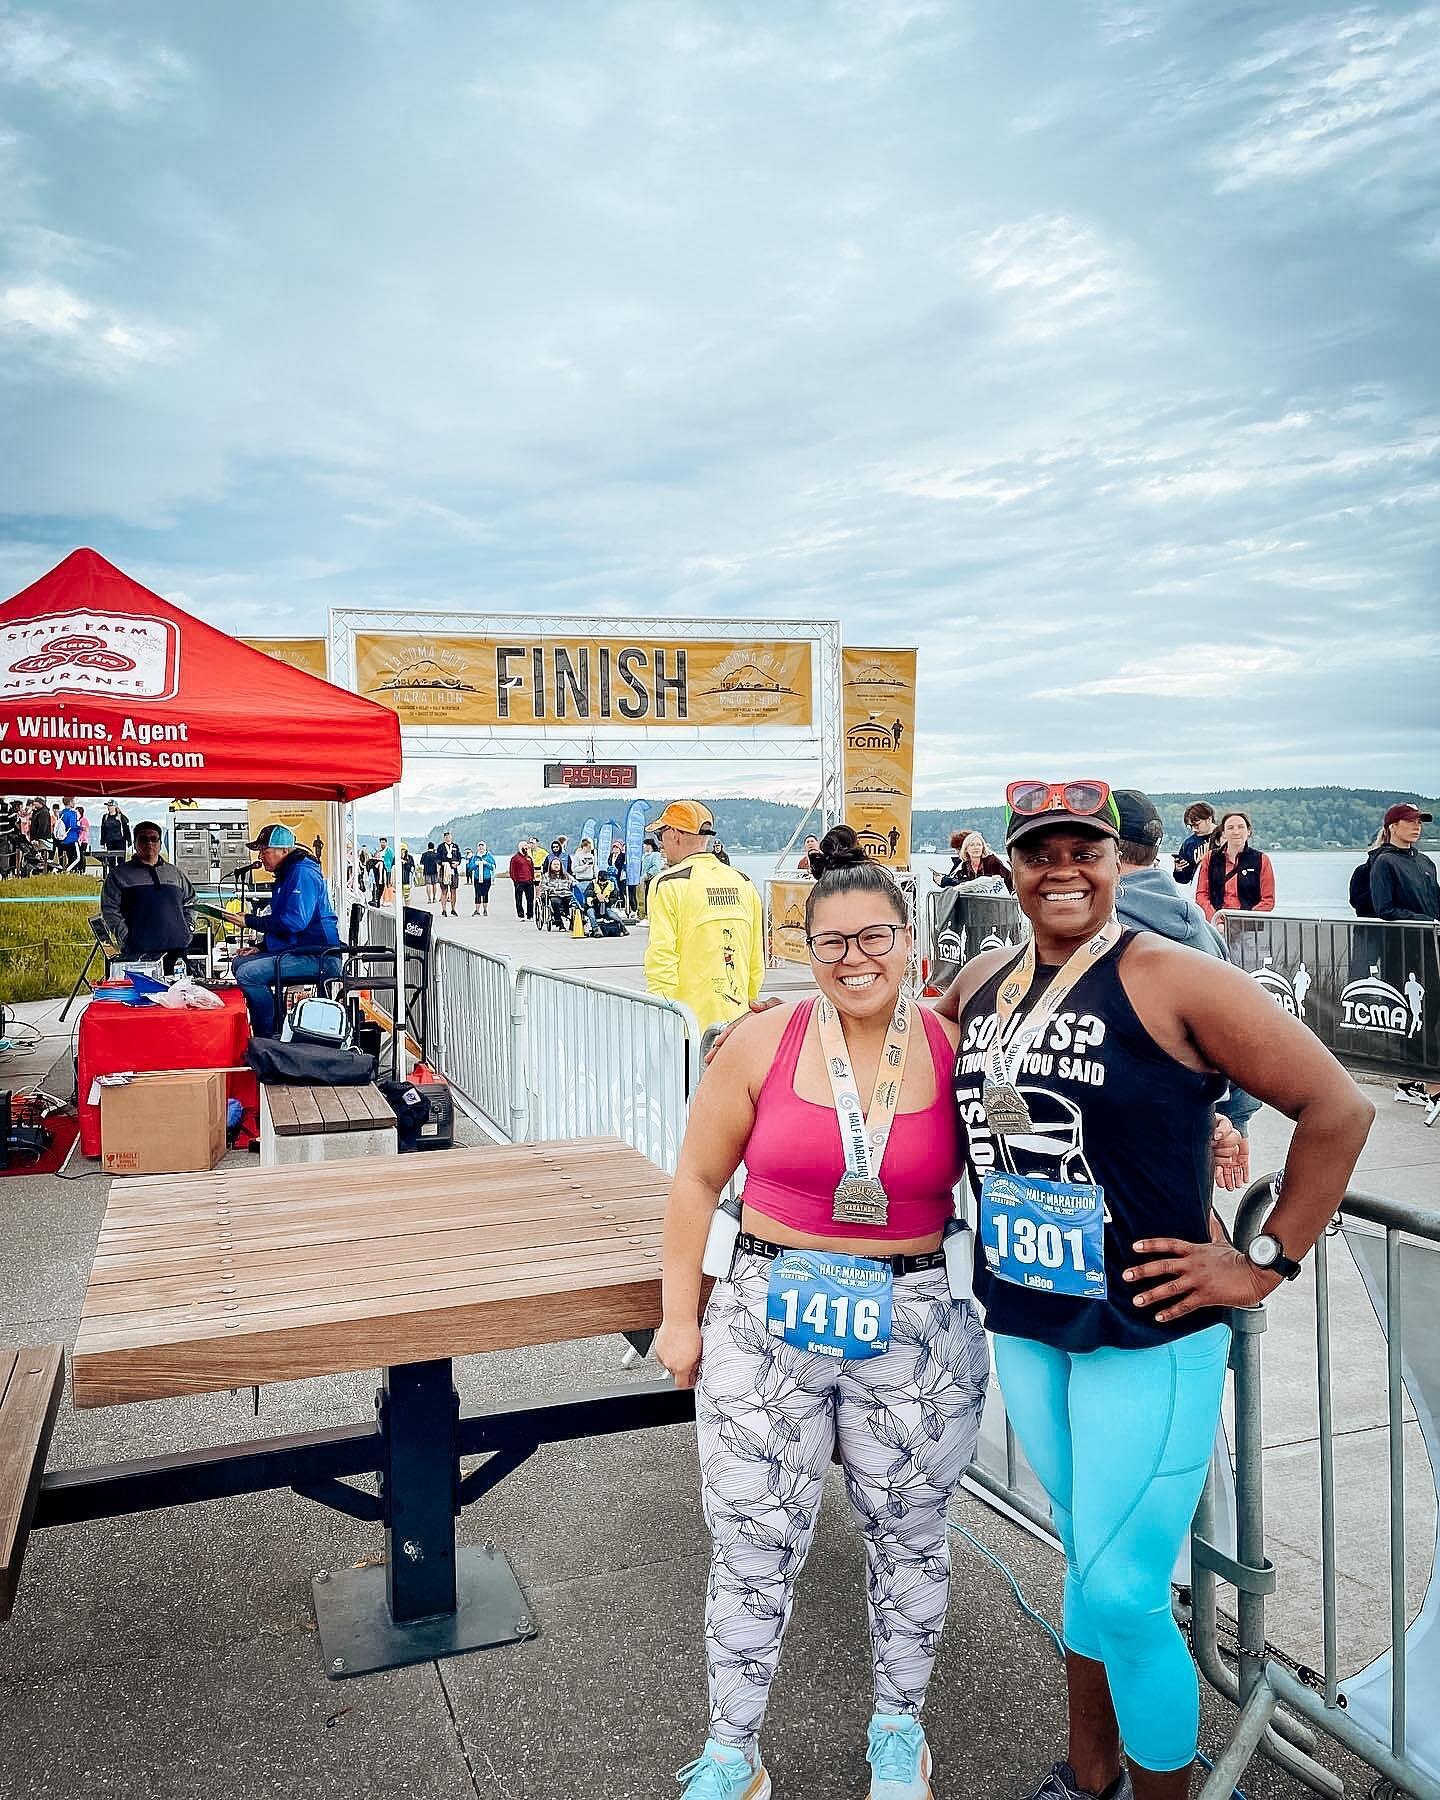 Congrats to Kristen and Stephanie for completing the Tacoma City Half Marathon on Sunday! 👏🏅🔥 
.
.
.
@kristenphillips7 @stephanielaboo @tacoma_wa #athlete #athletics #crossfitter #crossfitters #crossfitterswhorun #run #halfmarathon #getoutside #ru